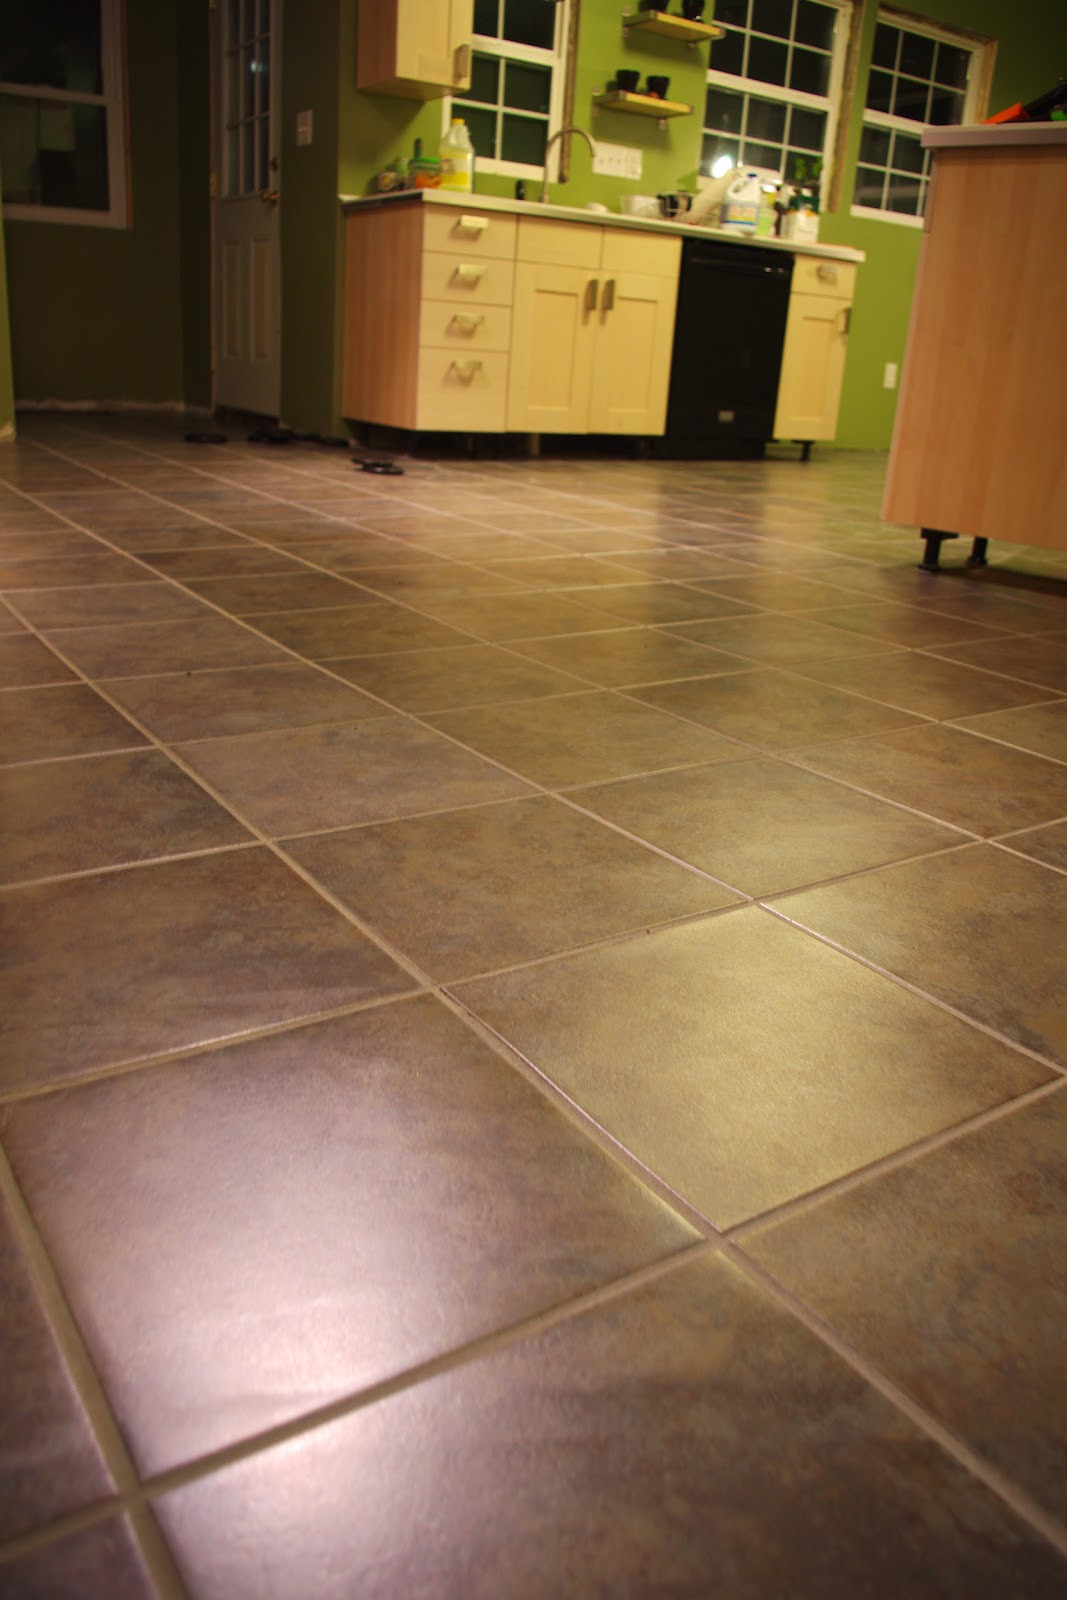 Best ideas about DIY Floor Tile
. Save or Pin Dan & Jess DIY "luxury" vinyl tile Now.